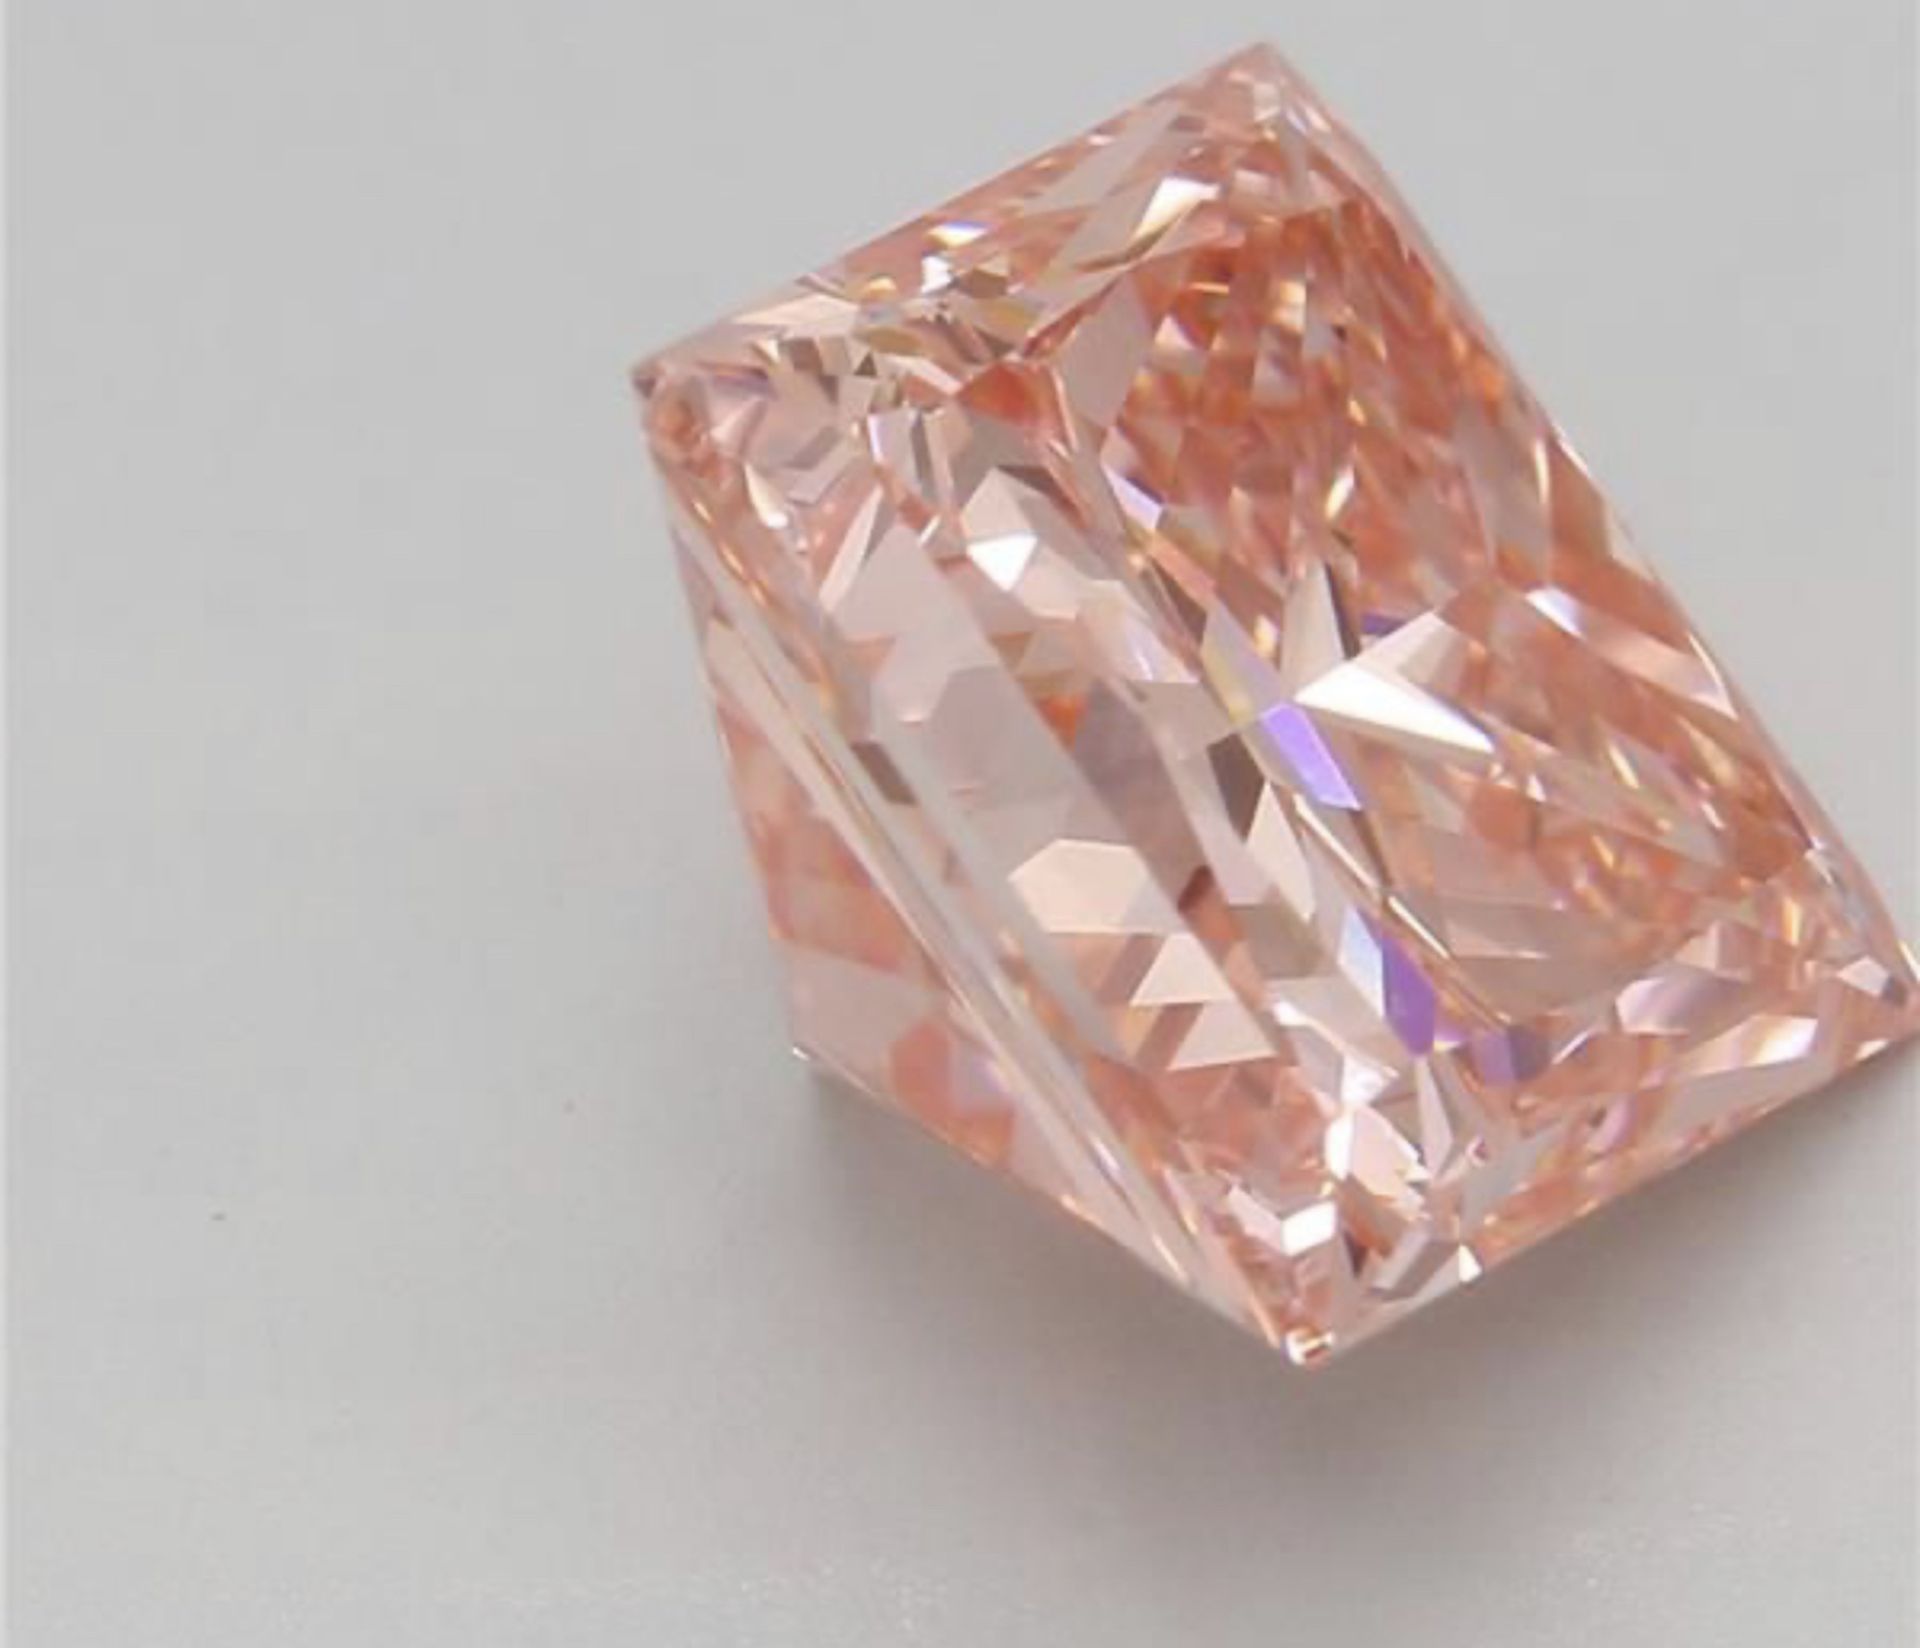 ** ON SALE ** Princess Cut Diamond Fancy Pink Colour VVS2 Clarity 3.02 Carat EX EX - LG593370815 - Image 5 of 8